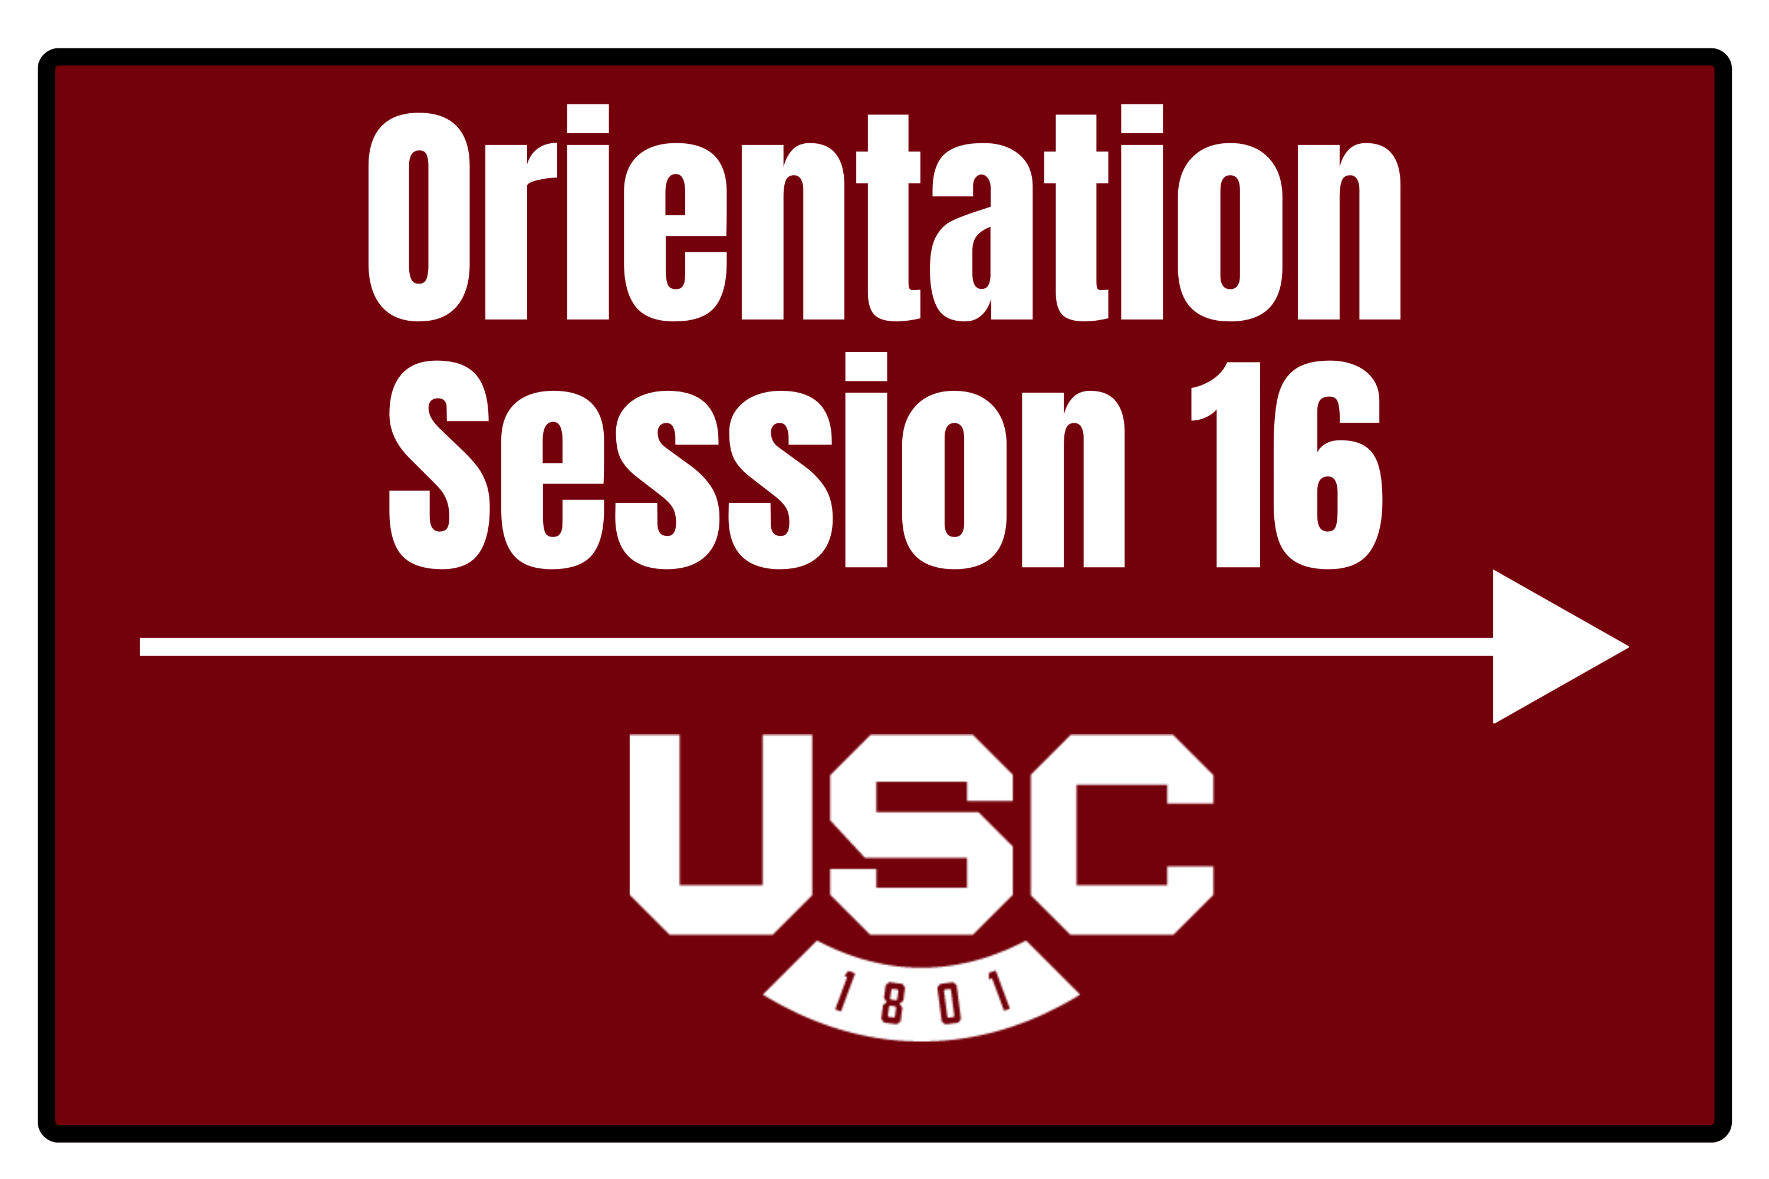 Orientation Session 16: July 22 - 23